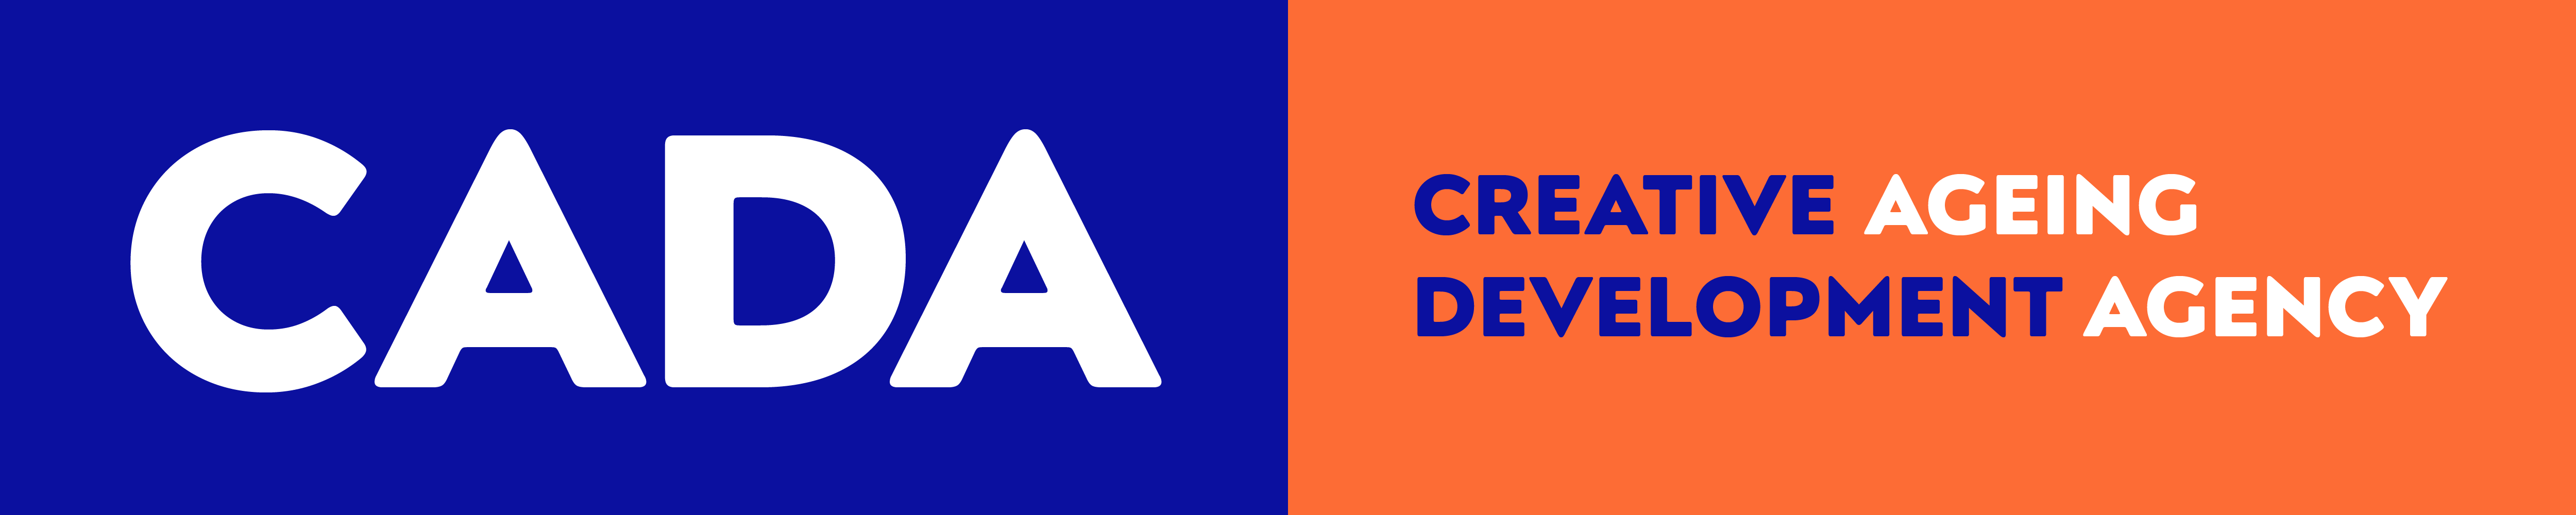 Creative Ageing Development Agency (CADA UK)